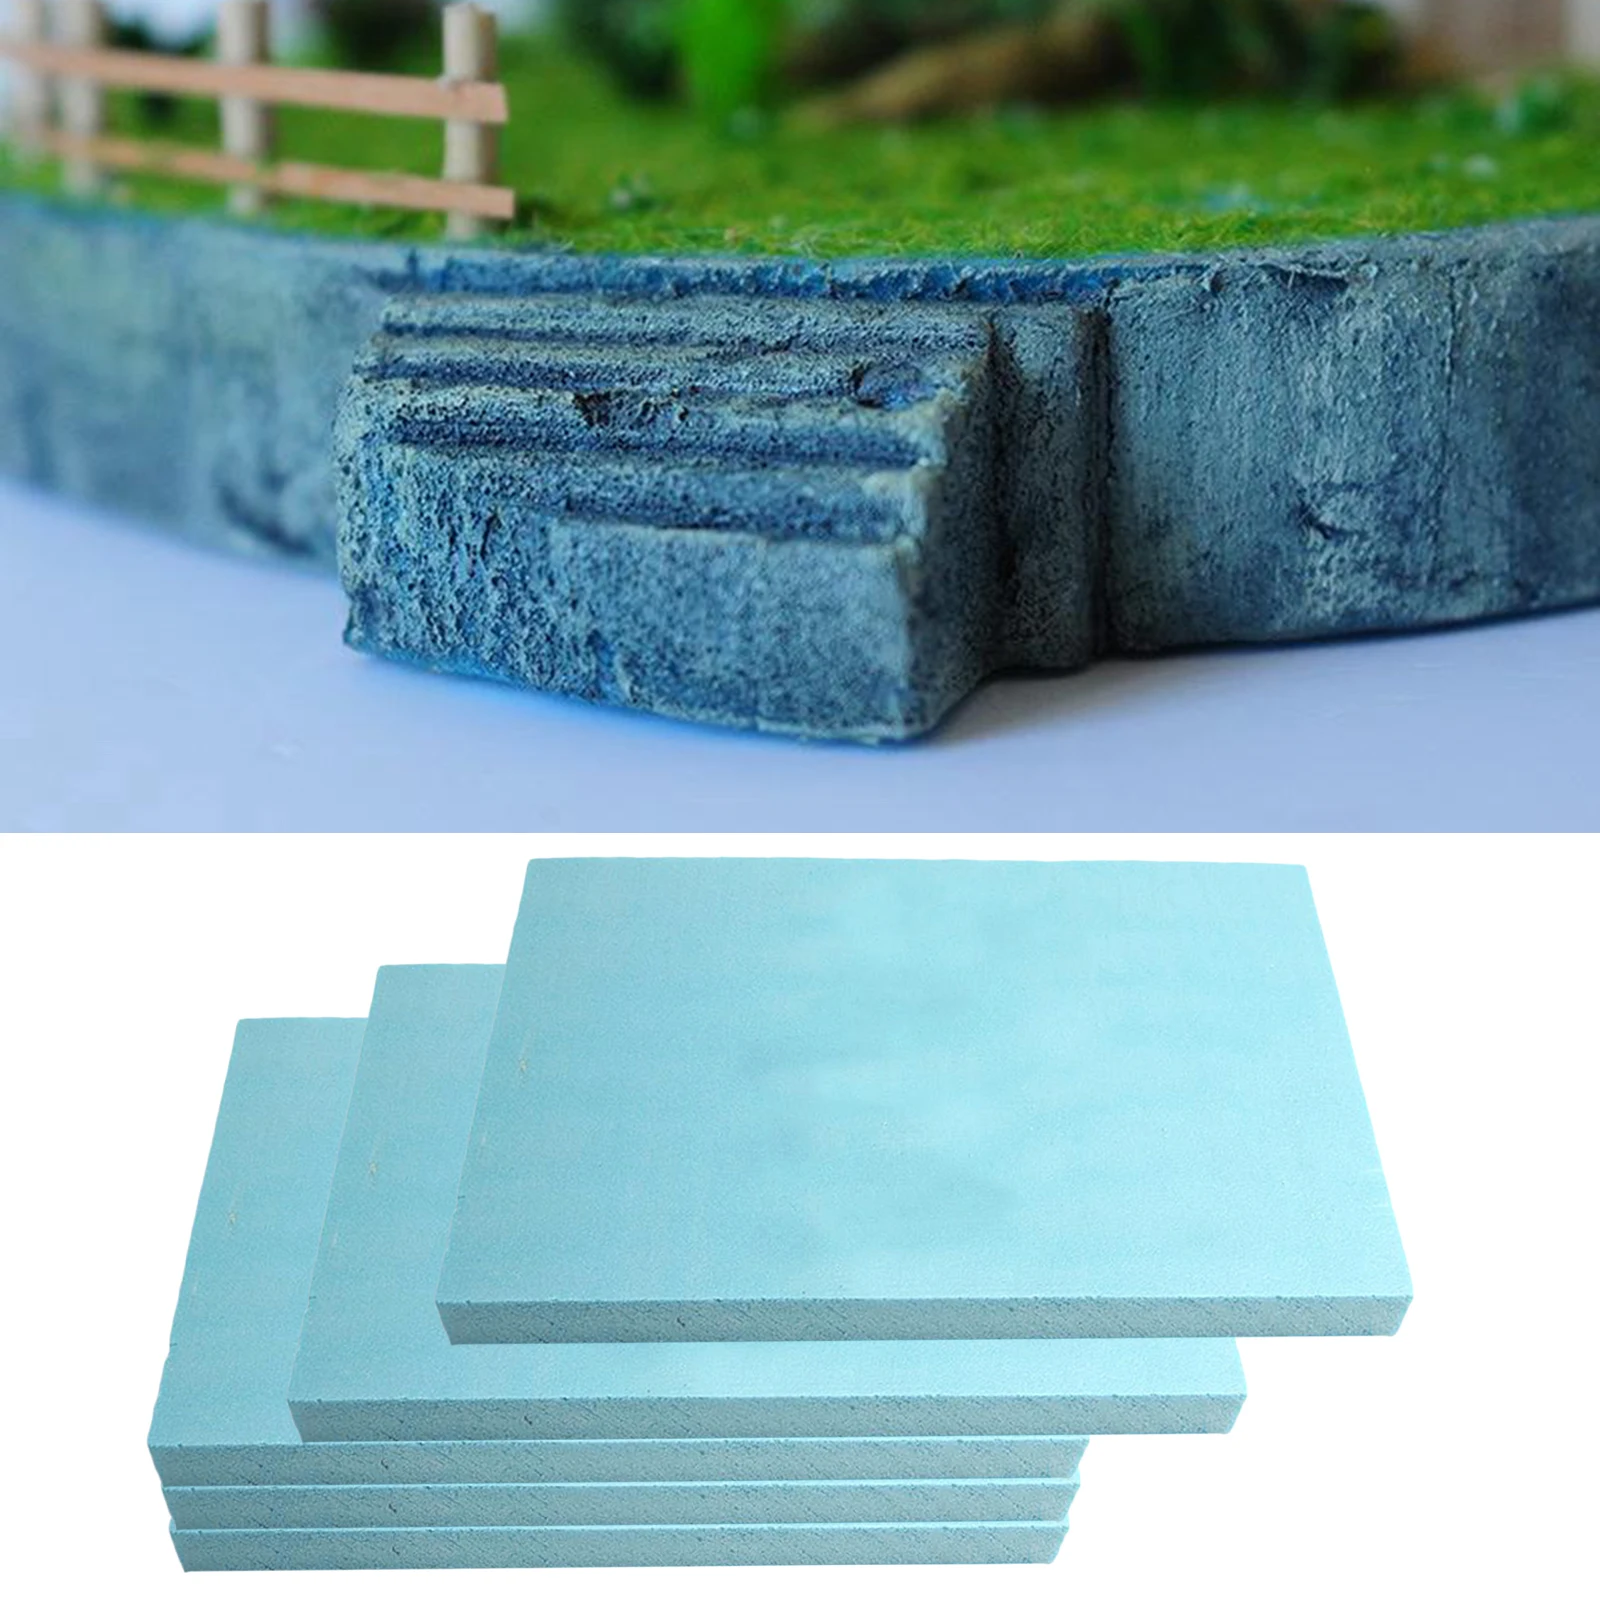 5 Piece Blue Foam Slab Board DIY Crafts Modelling Building Scenic Terrain Kit, 295x395x30mm